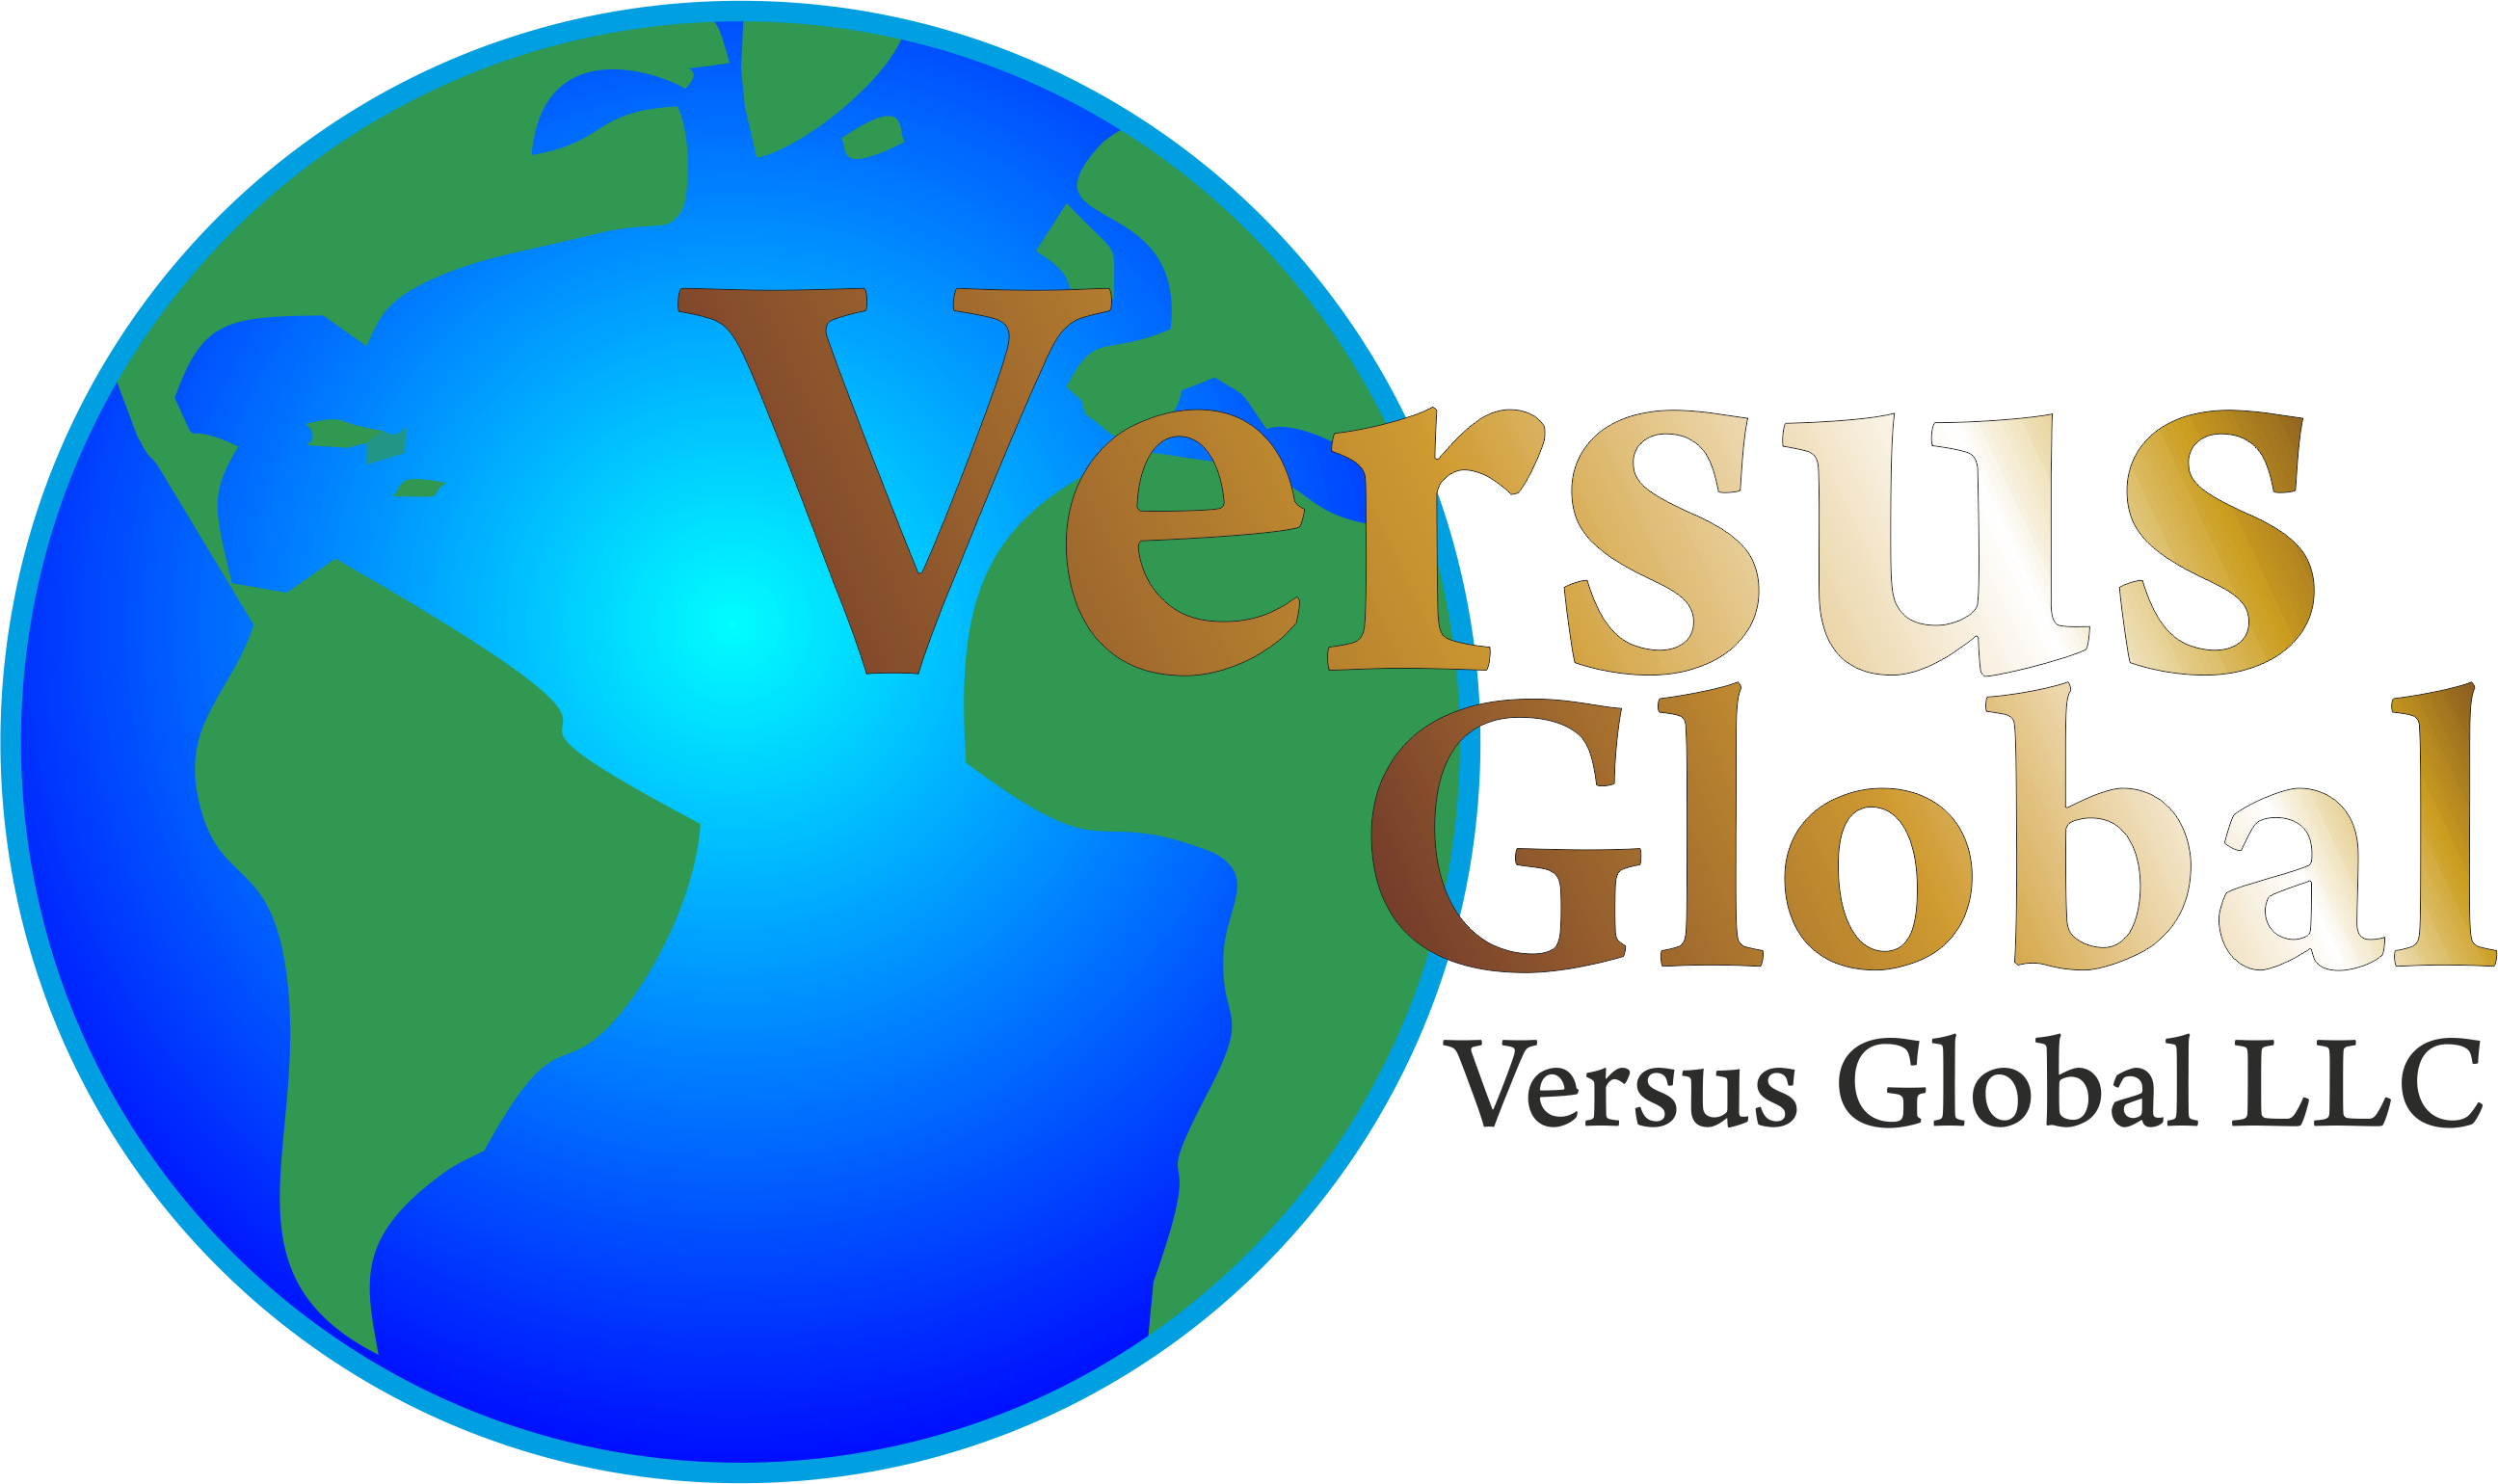 Versus Global